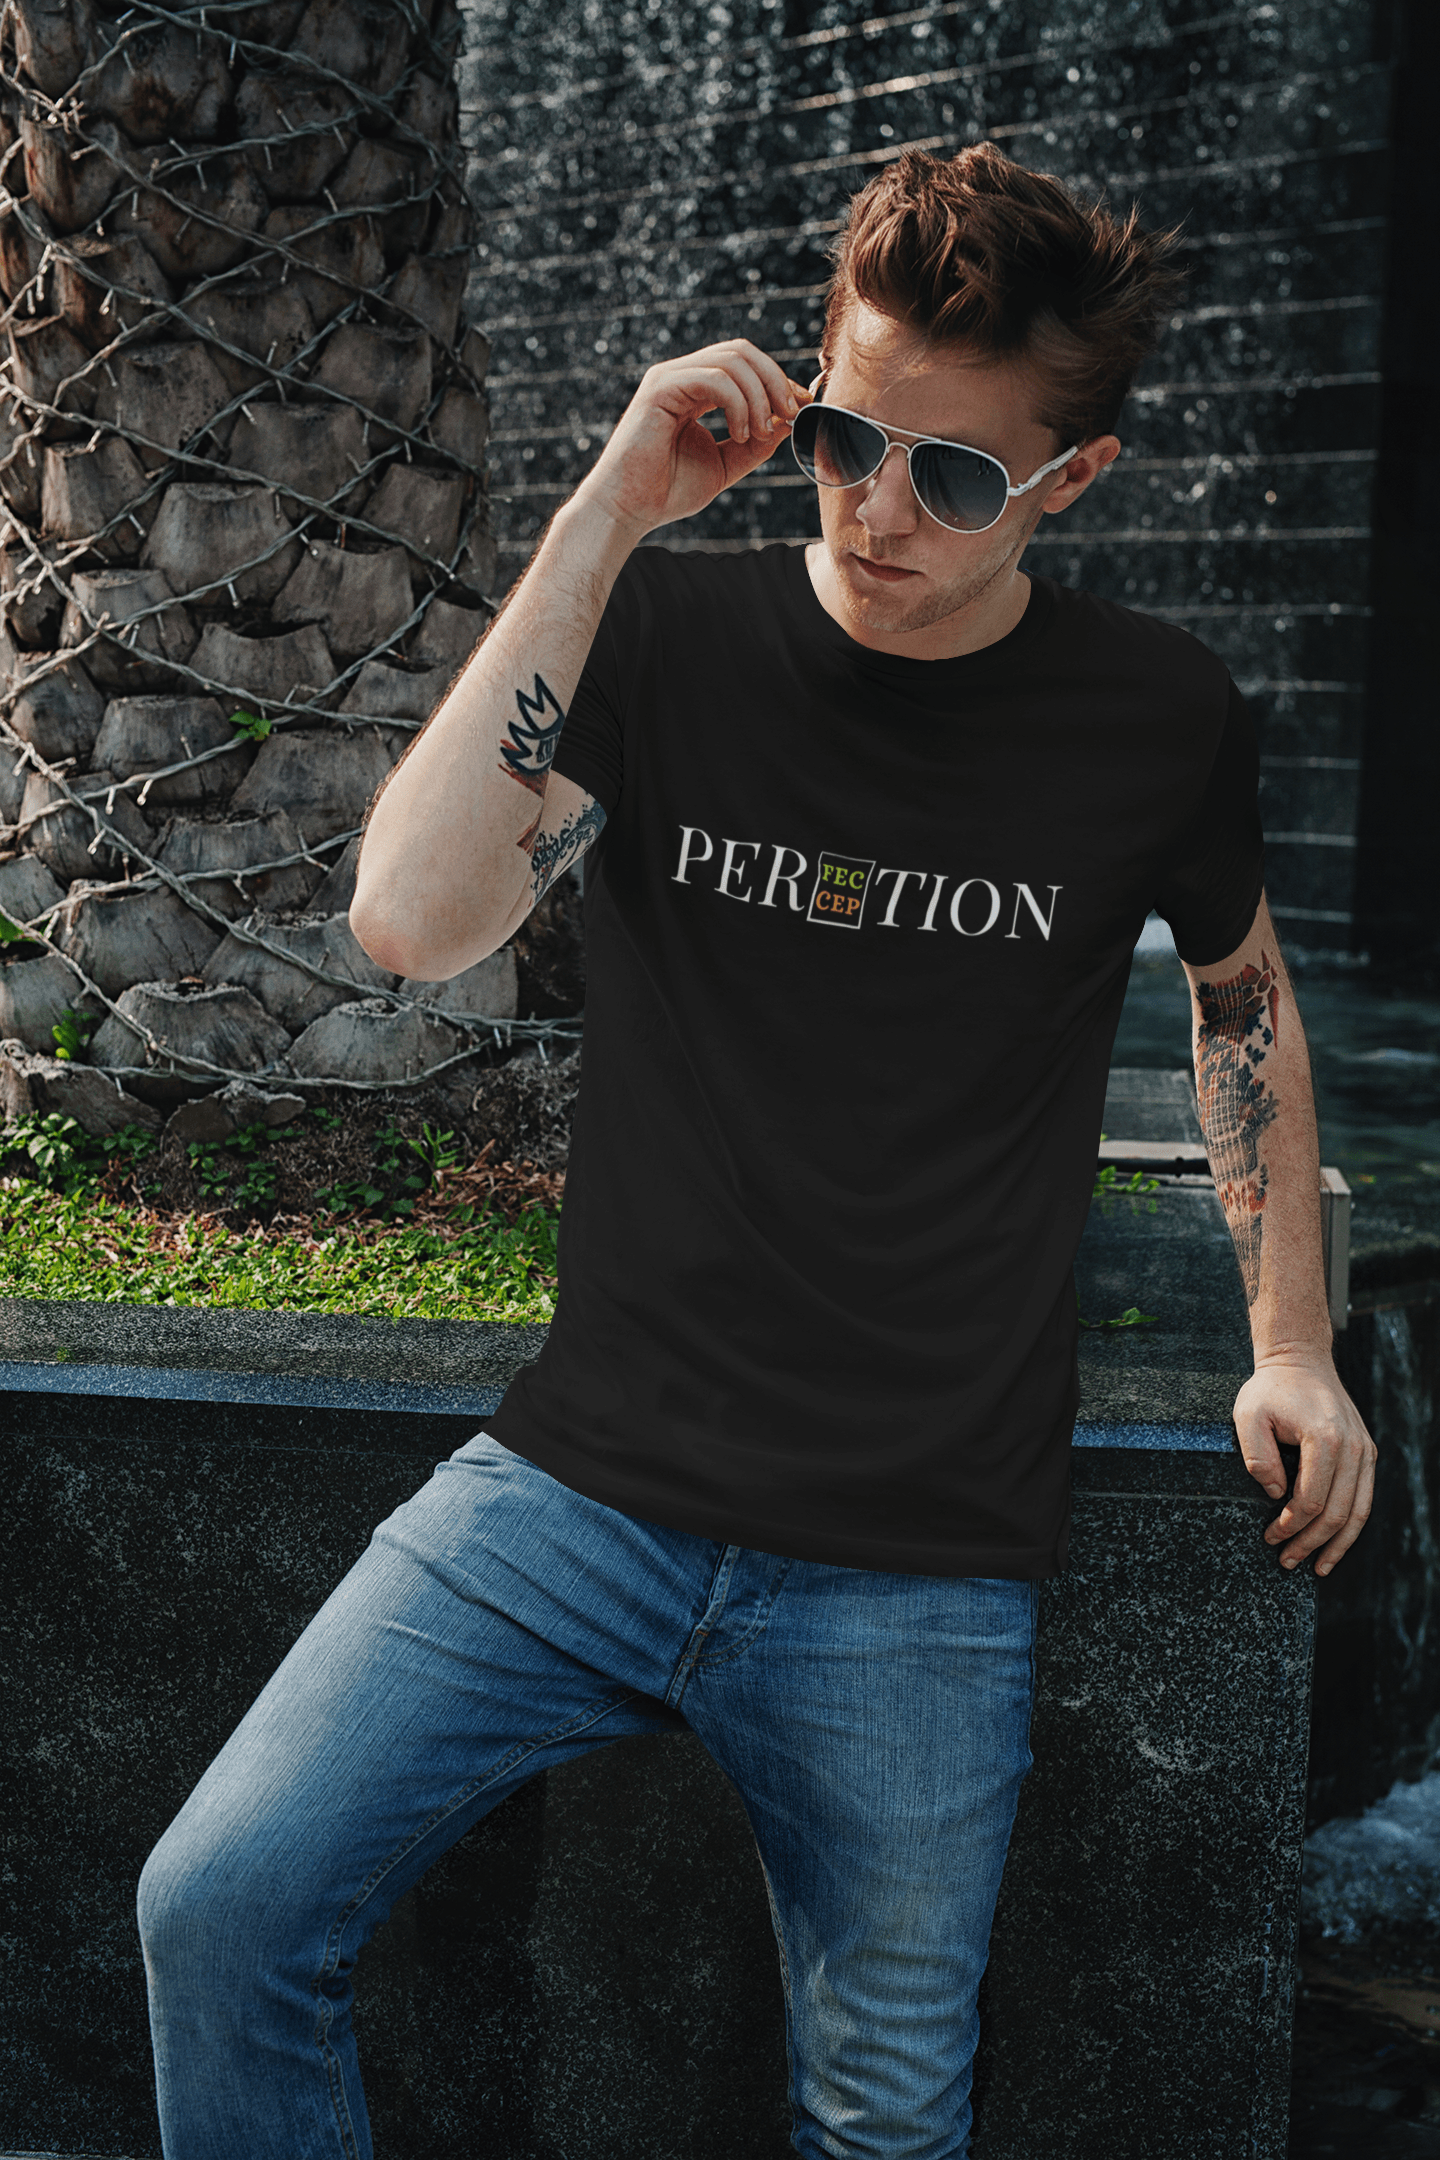 Perfection - Ken Adams